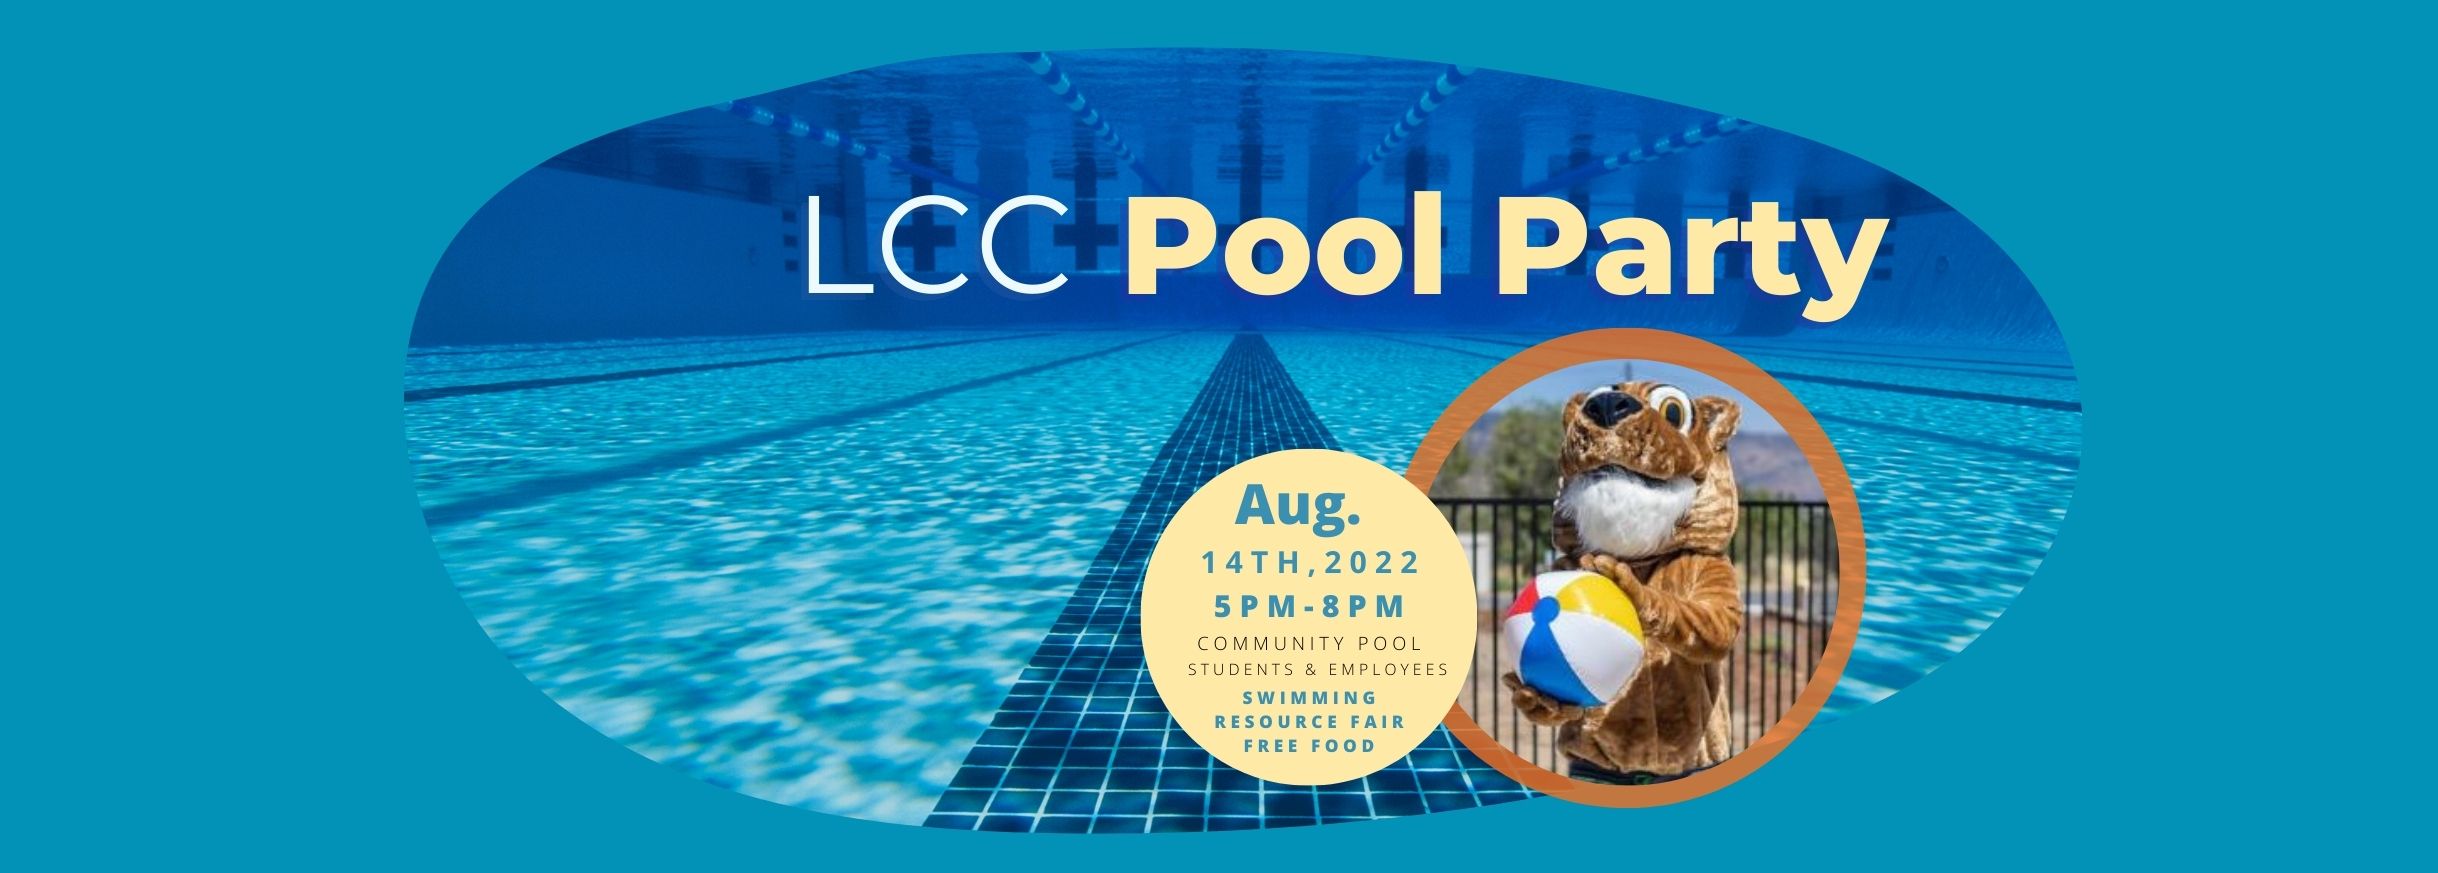 LCC Pool Party Aug. 14, 2022